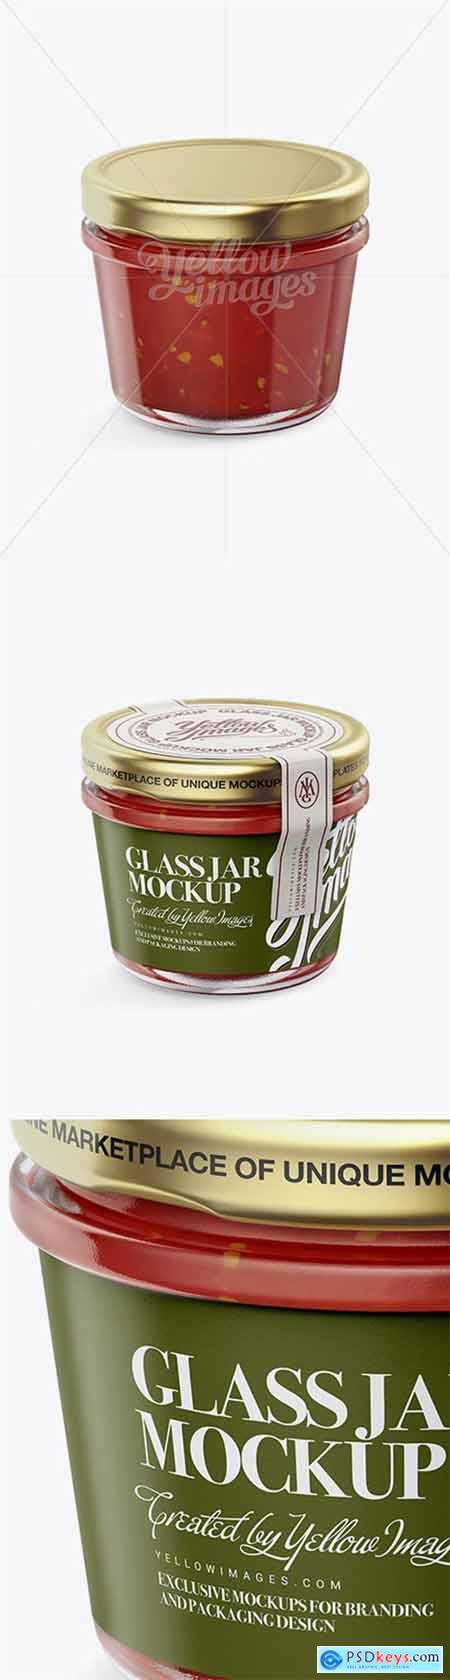 Glass Jar with Sweet Chilli Sauce Mockup - Halfside View 16189